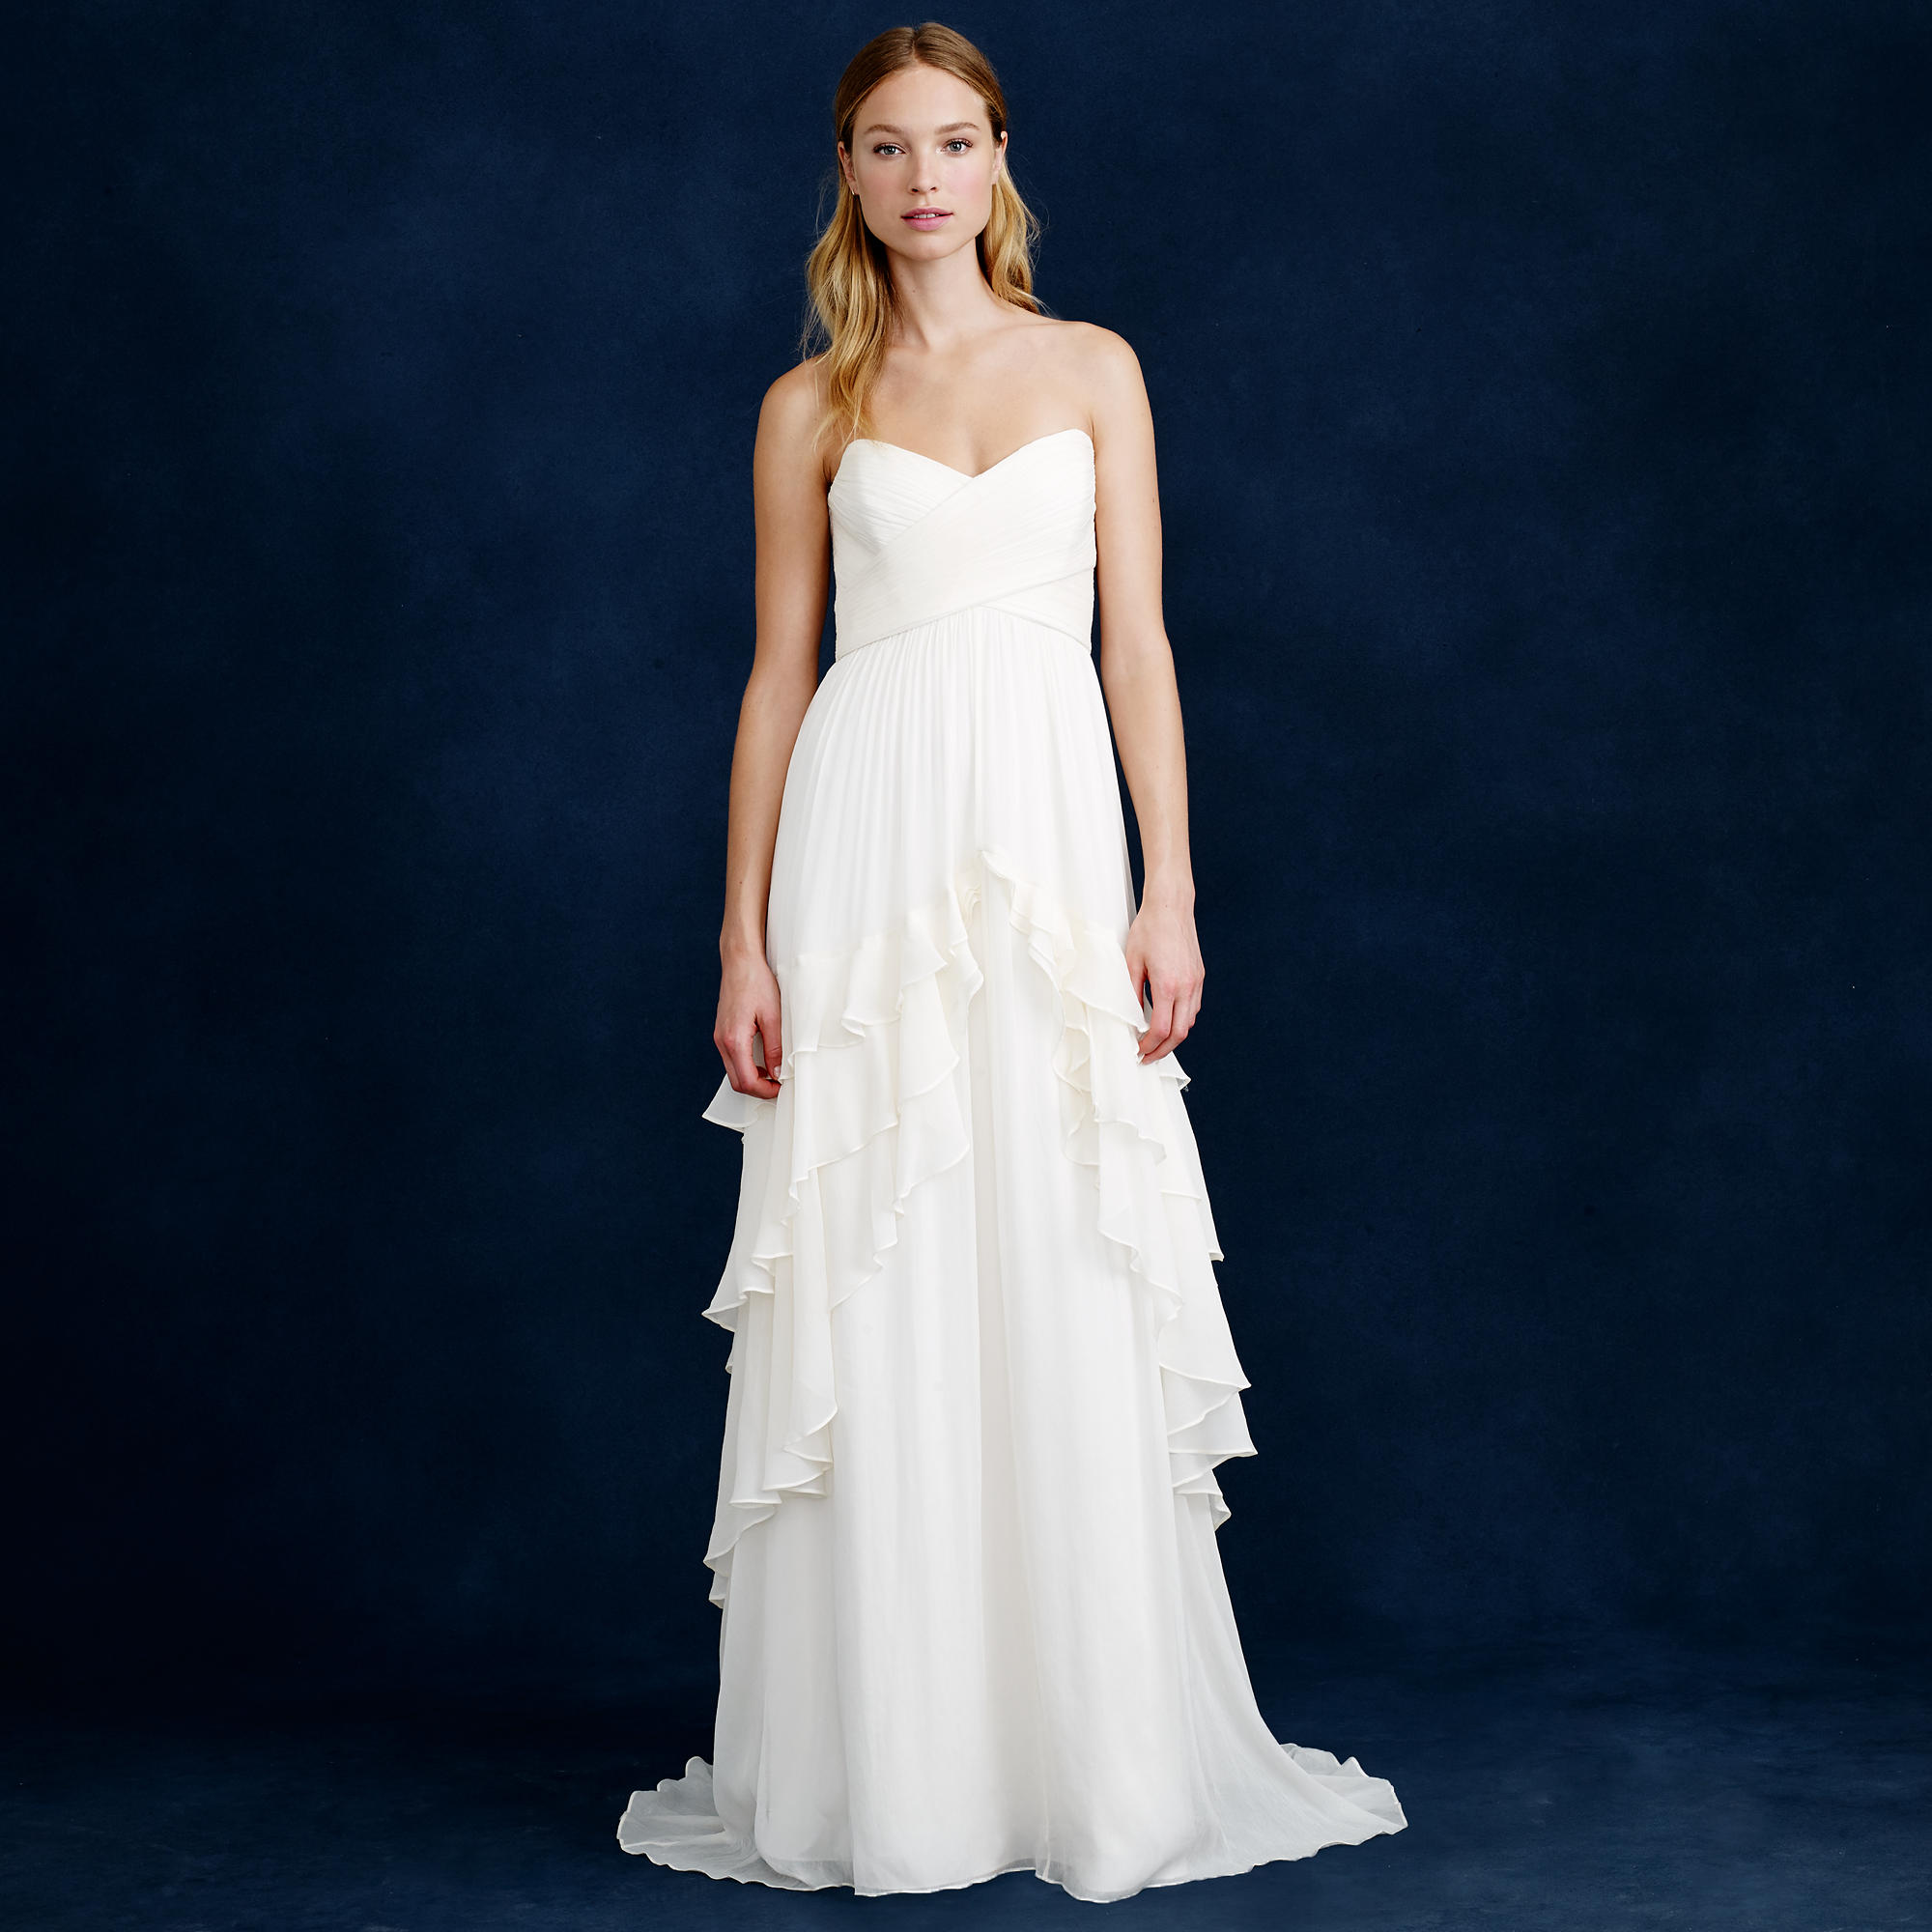 Ruffled Wedding Dress Under $1000